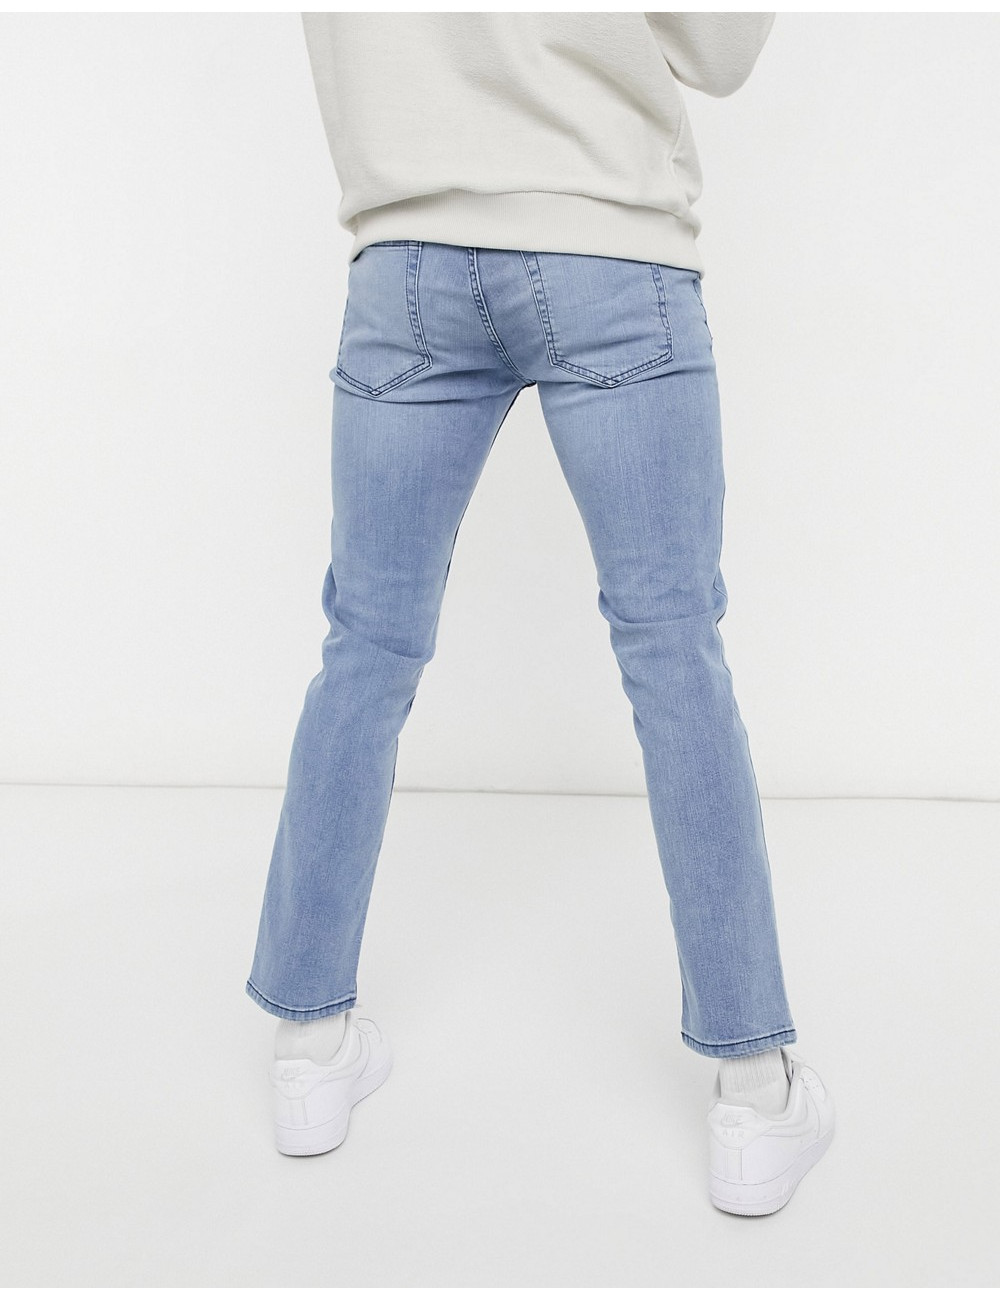 Burton Menswear slim jeans...